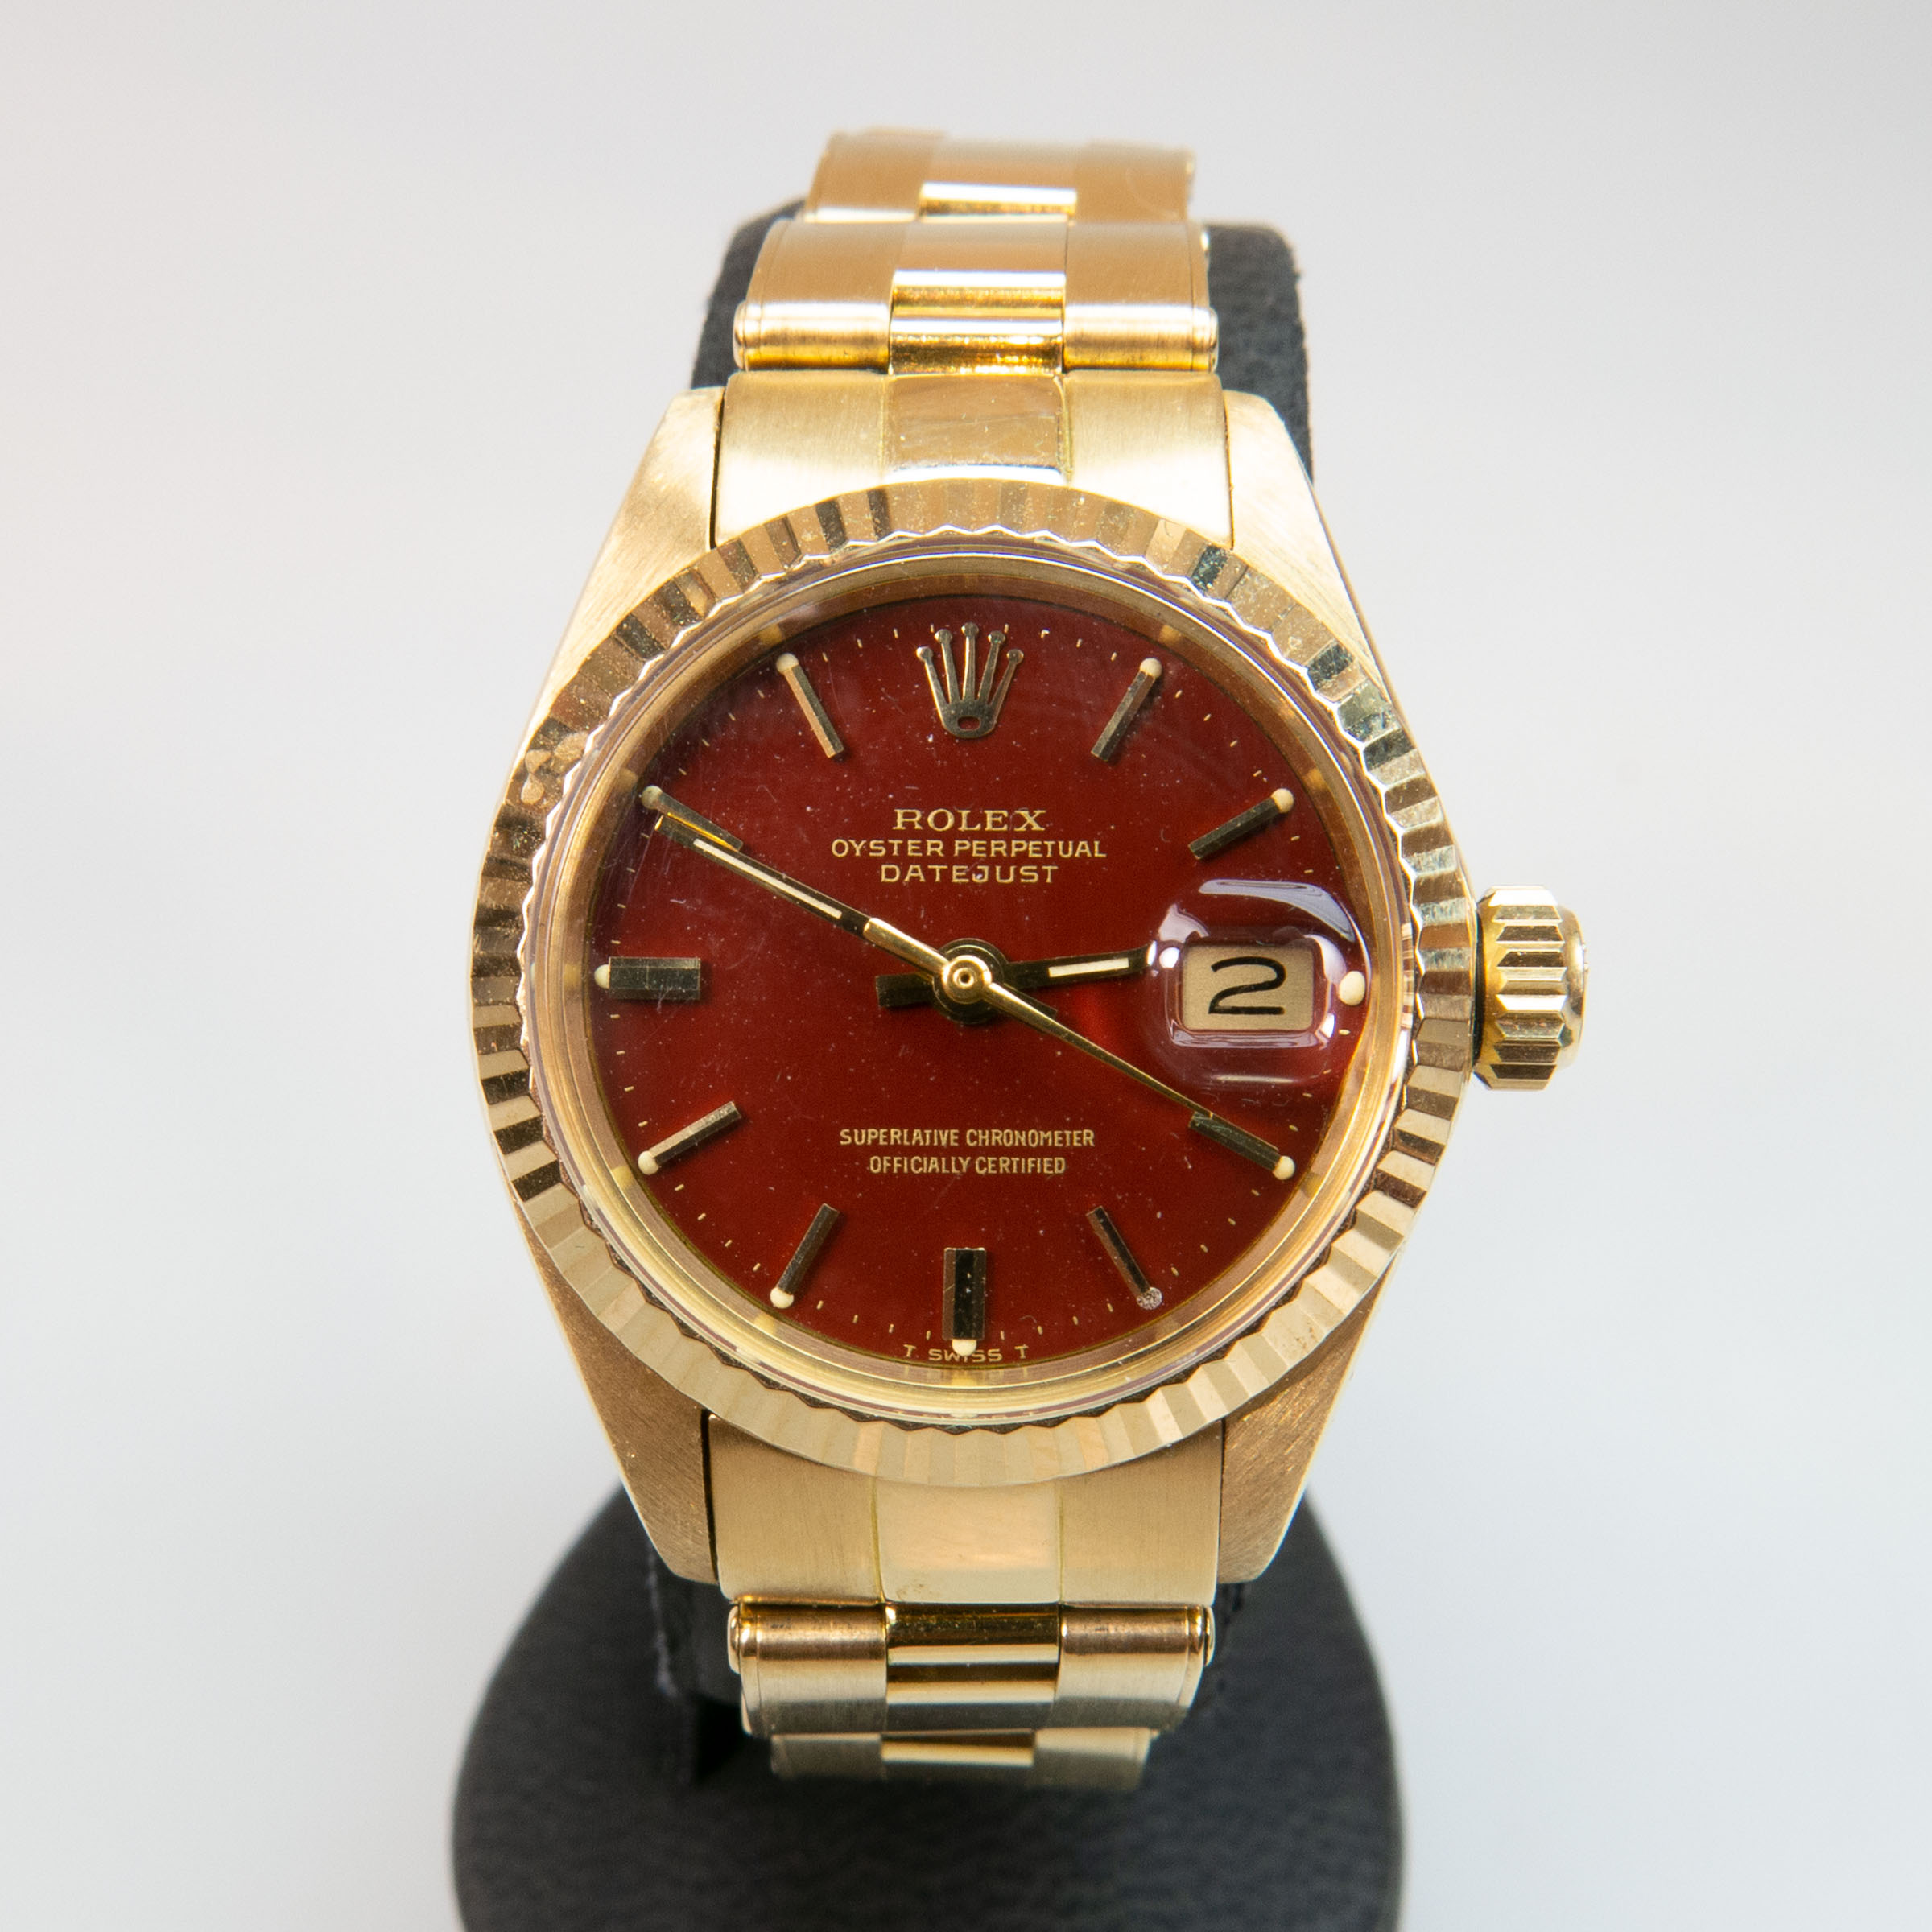 Lady's Rolex Oyster Perpetual Datejust "Stella" Wristwatch